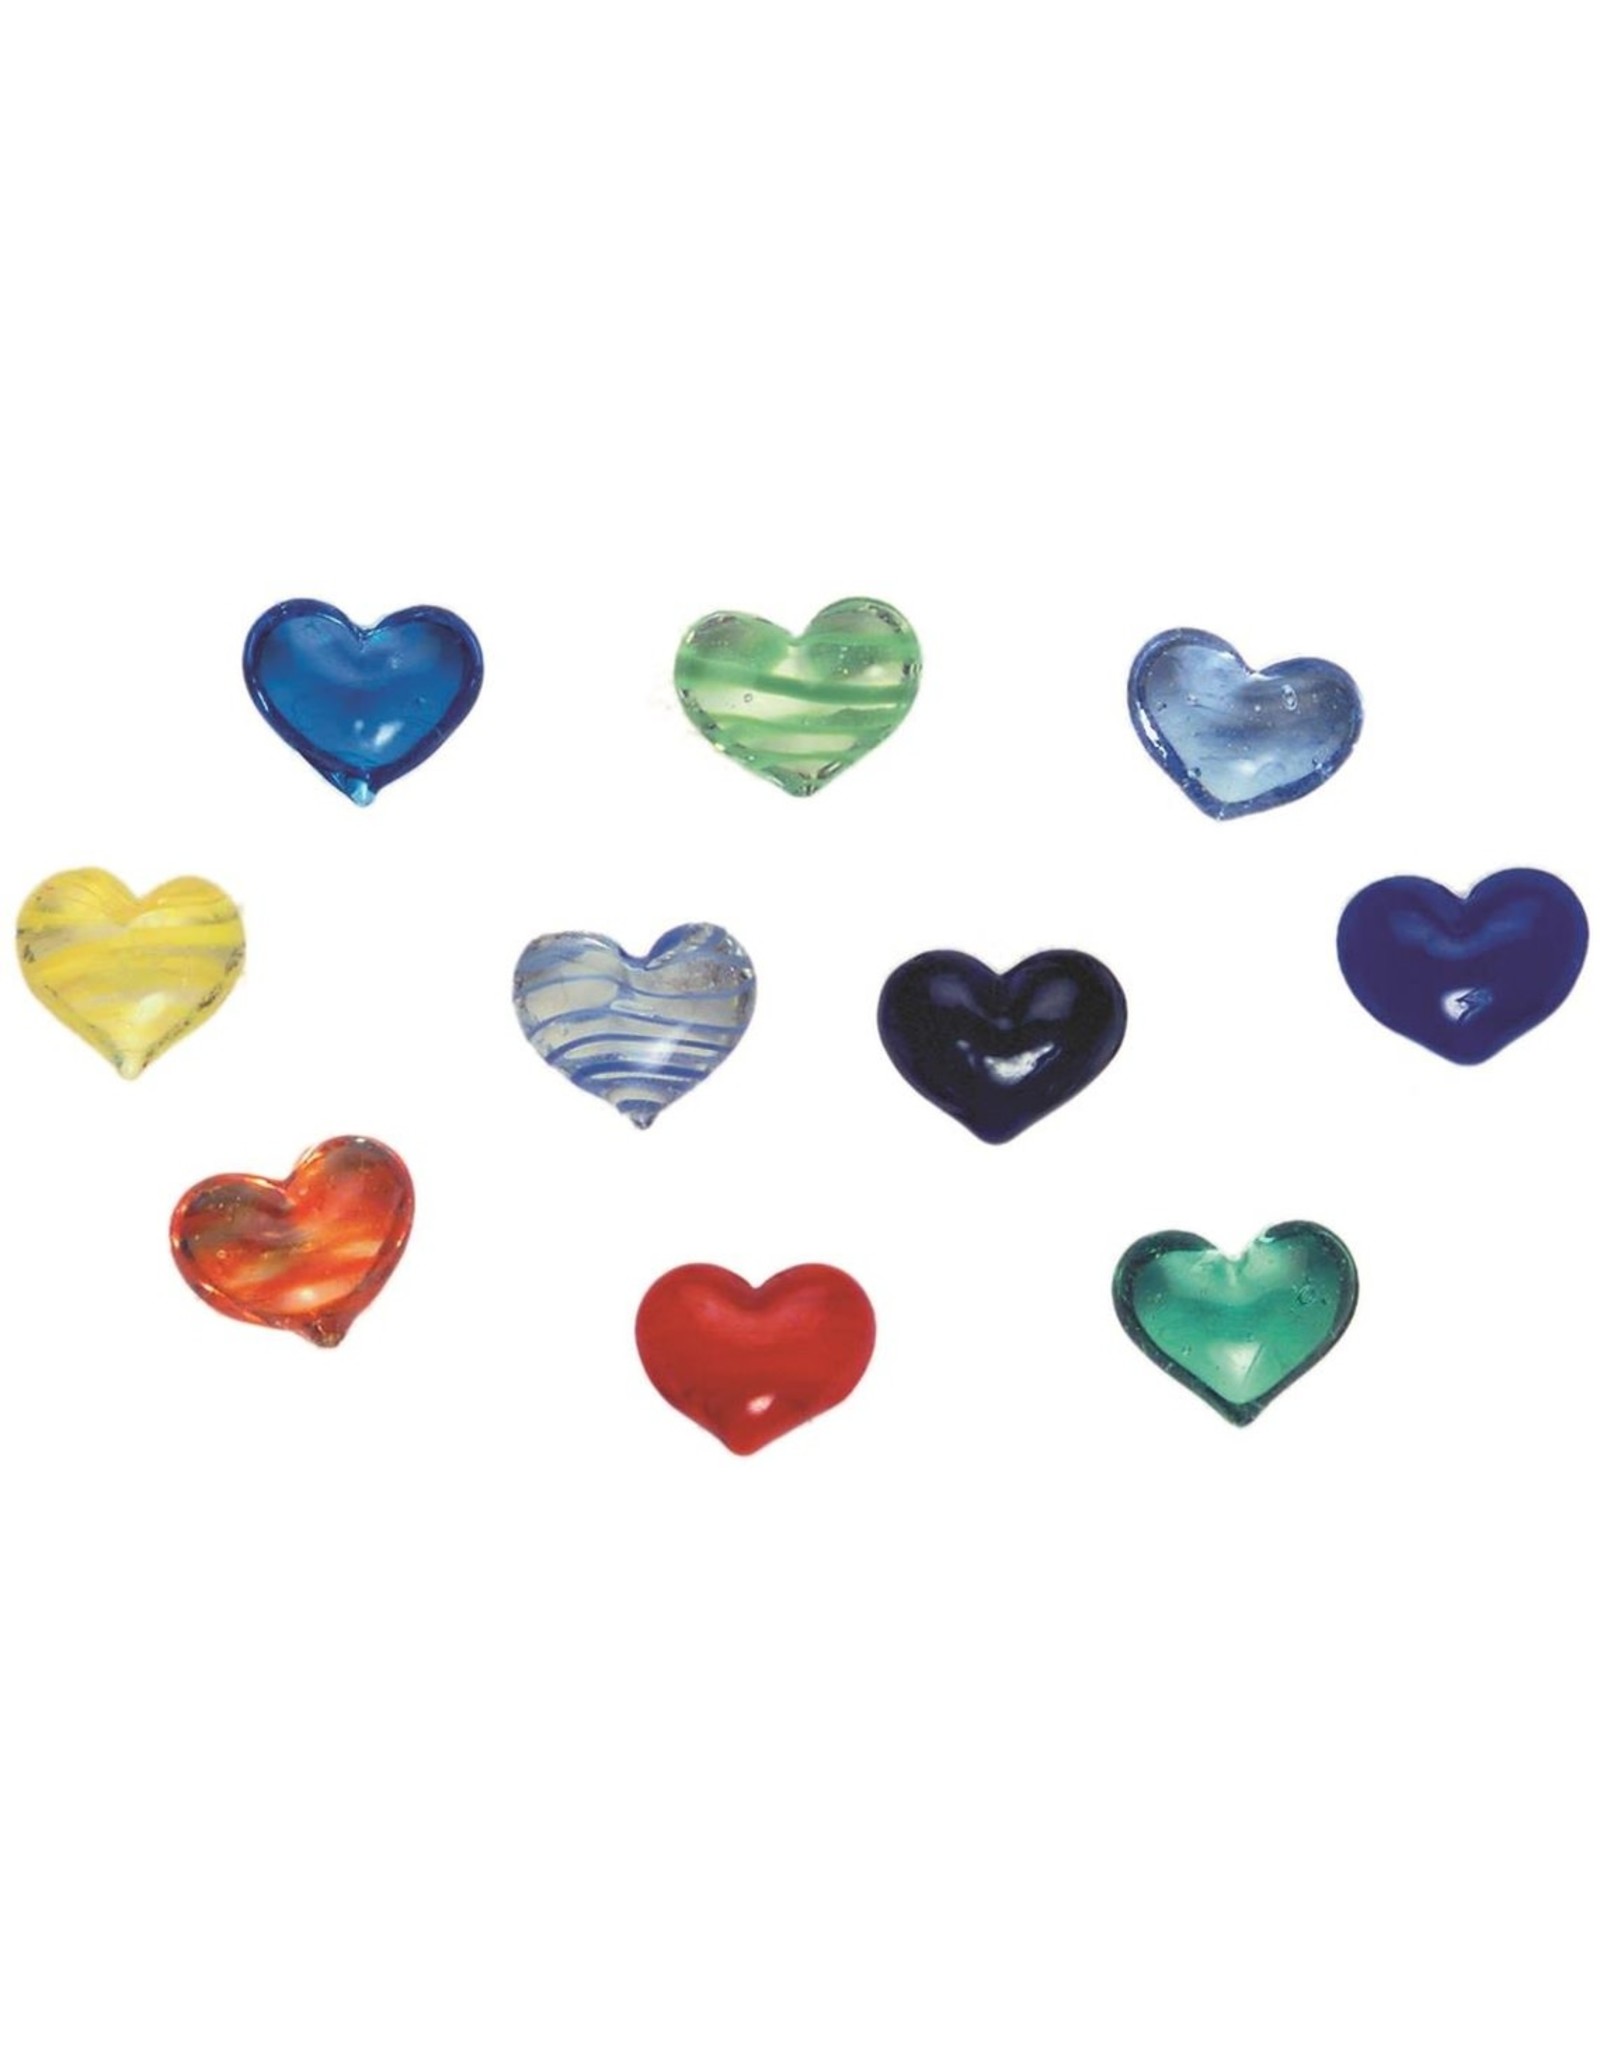 Raeder Klein gelukje - Glazen Hartje - Verschillende kleuren -  3,4 x 3,4 cm